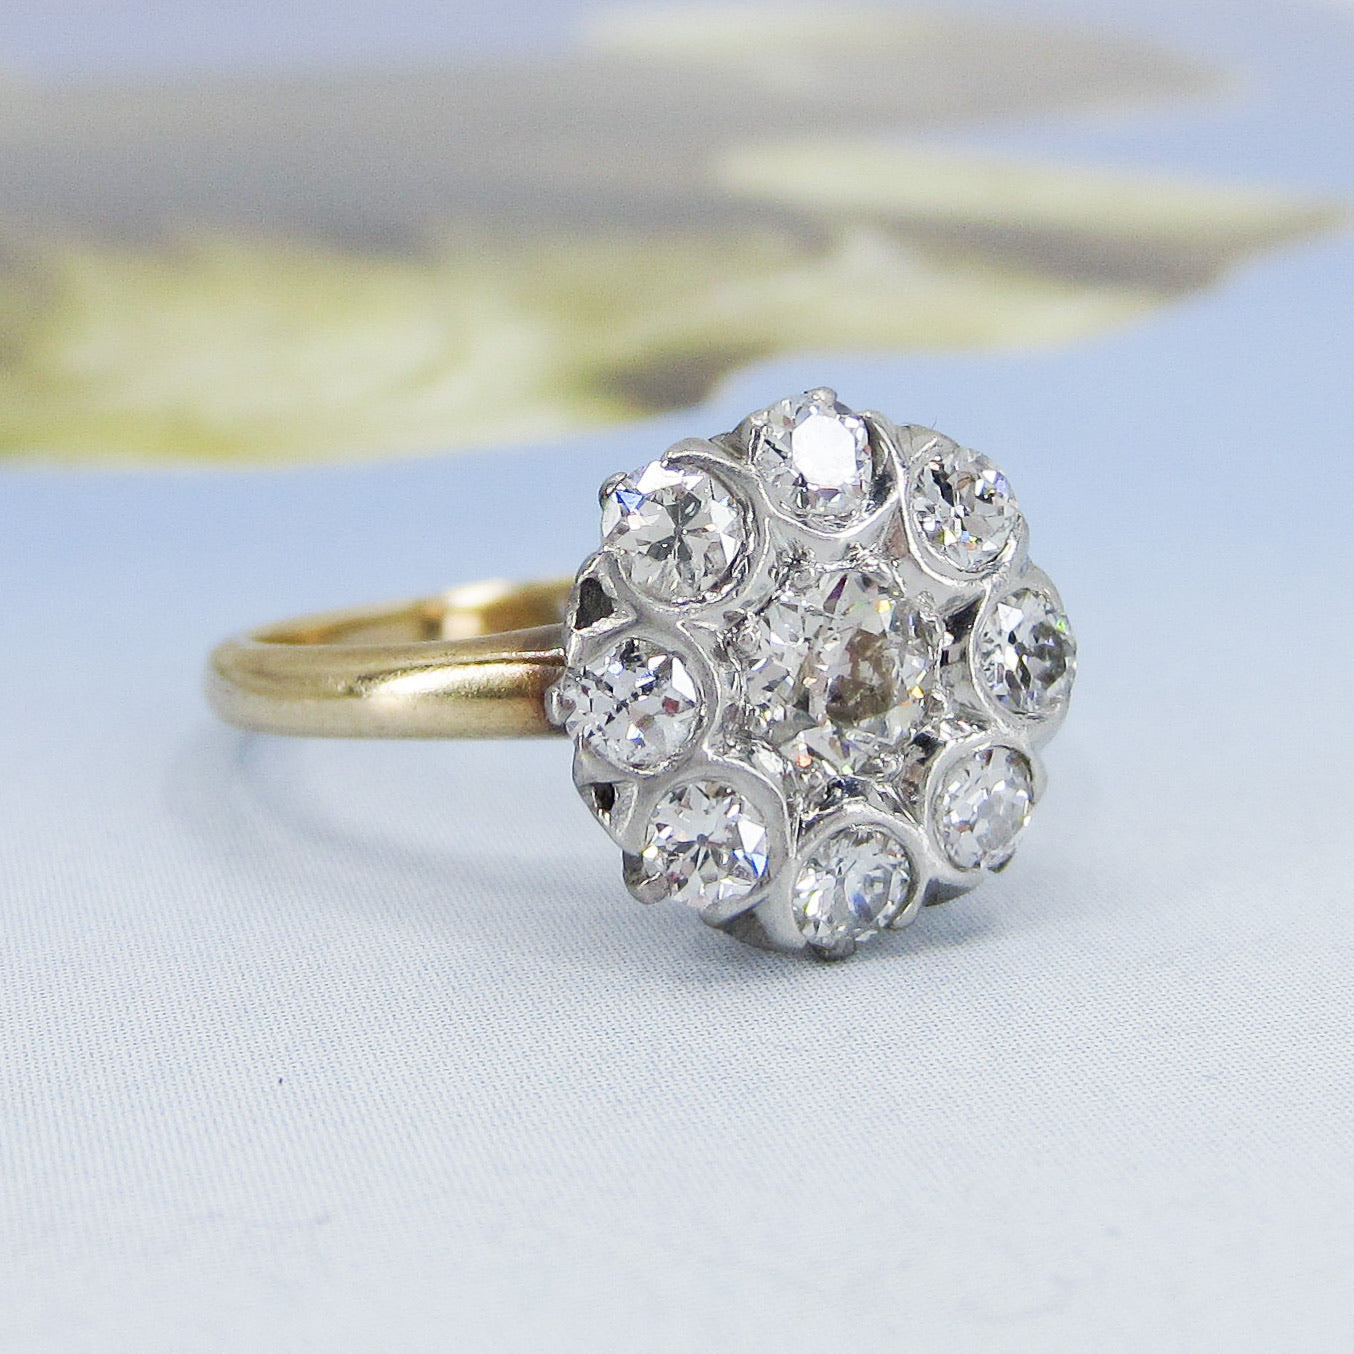 SOLD—Art Deco Old European Diamond Cluster Ring 14k c. 1920